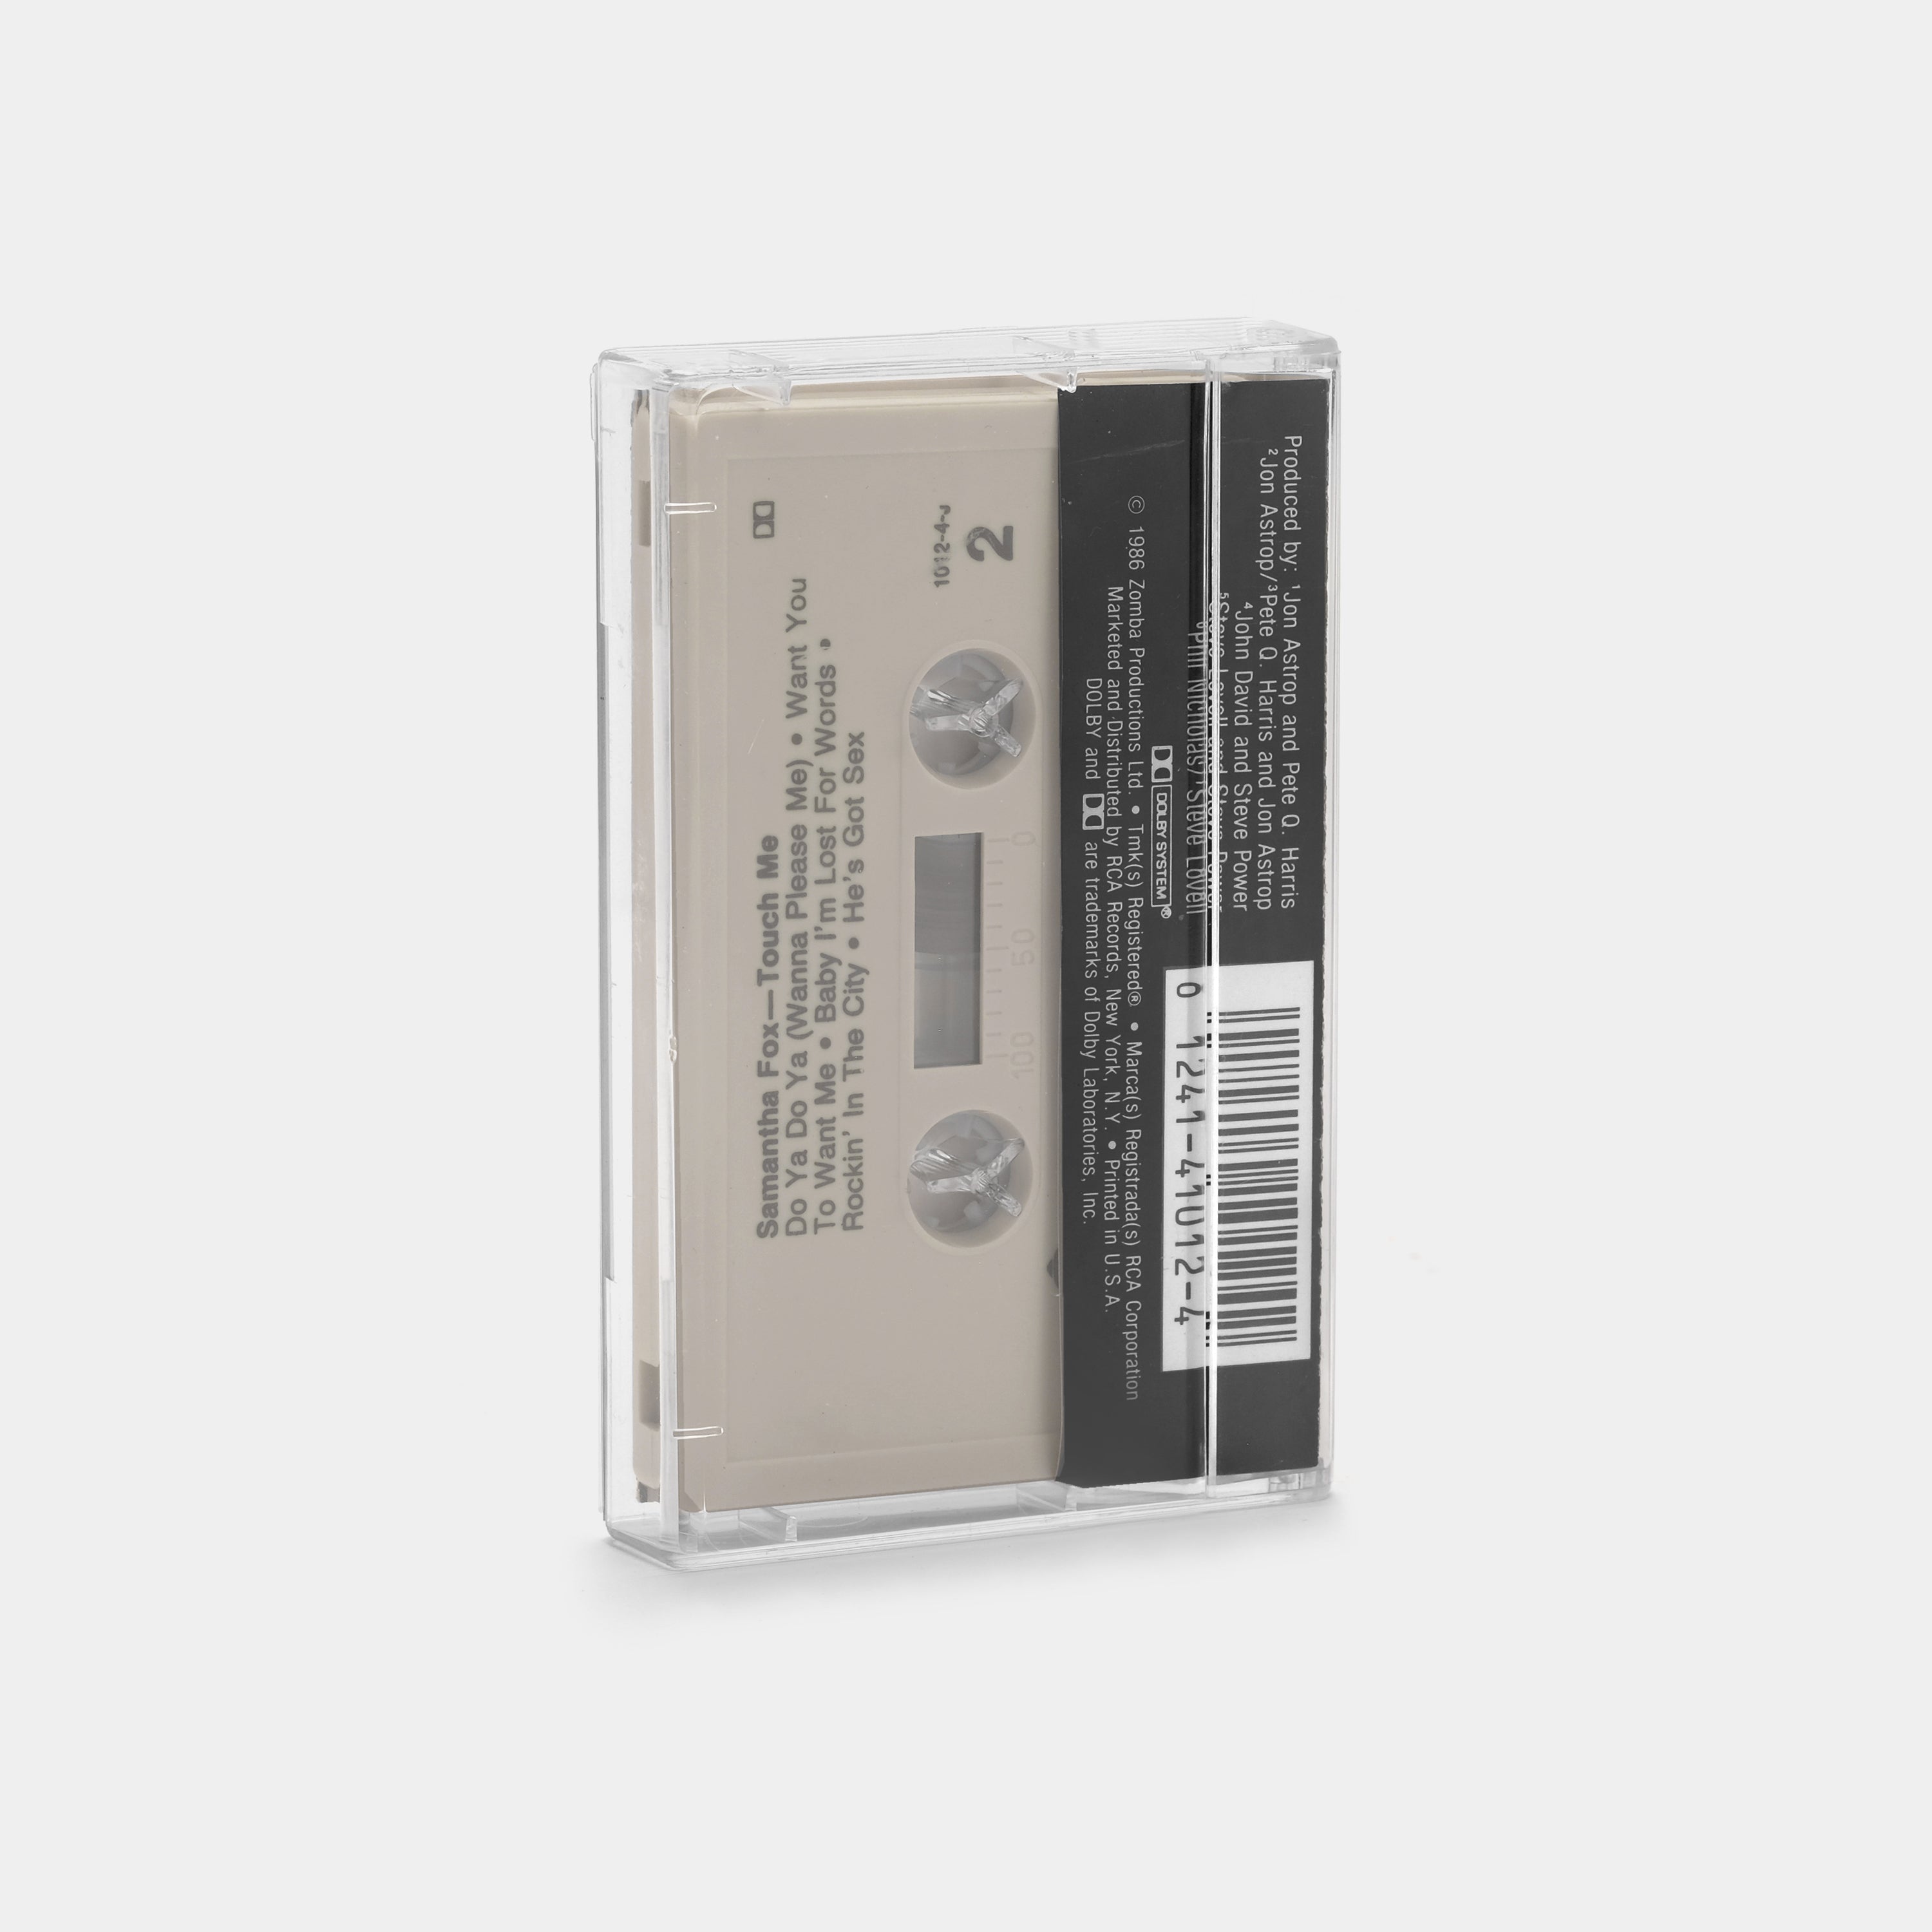 Samantha Fox - Touch Me Cassette Tape